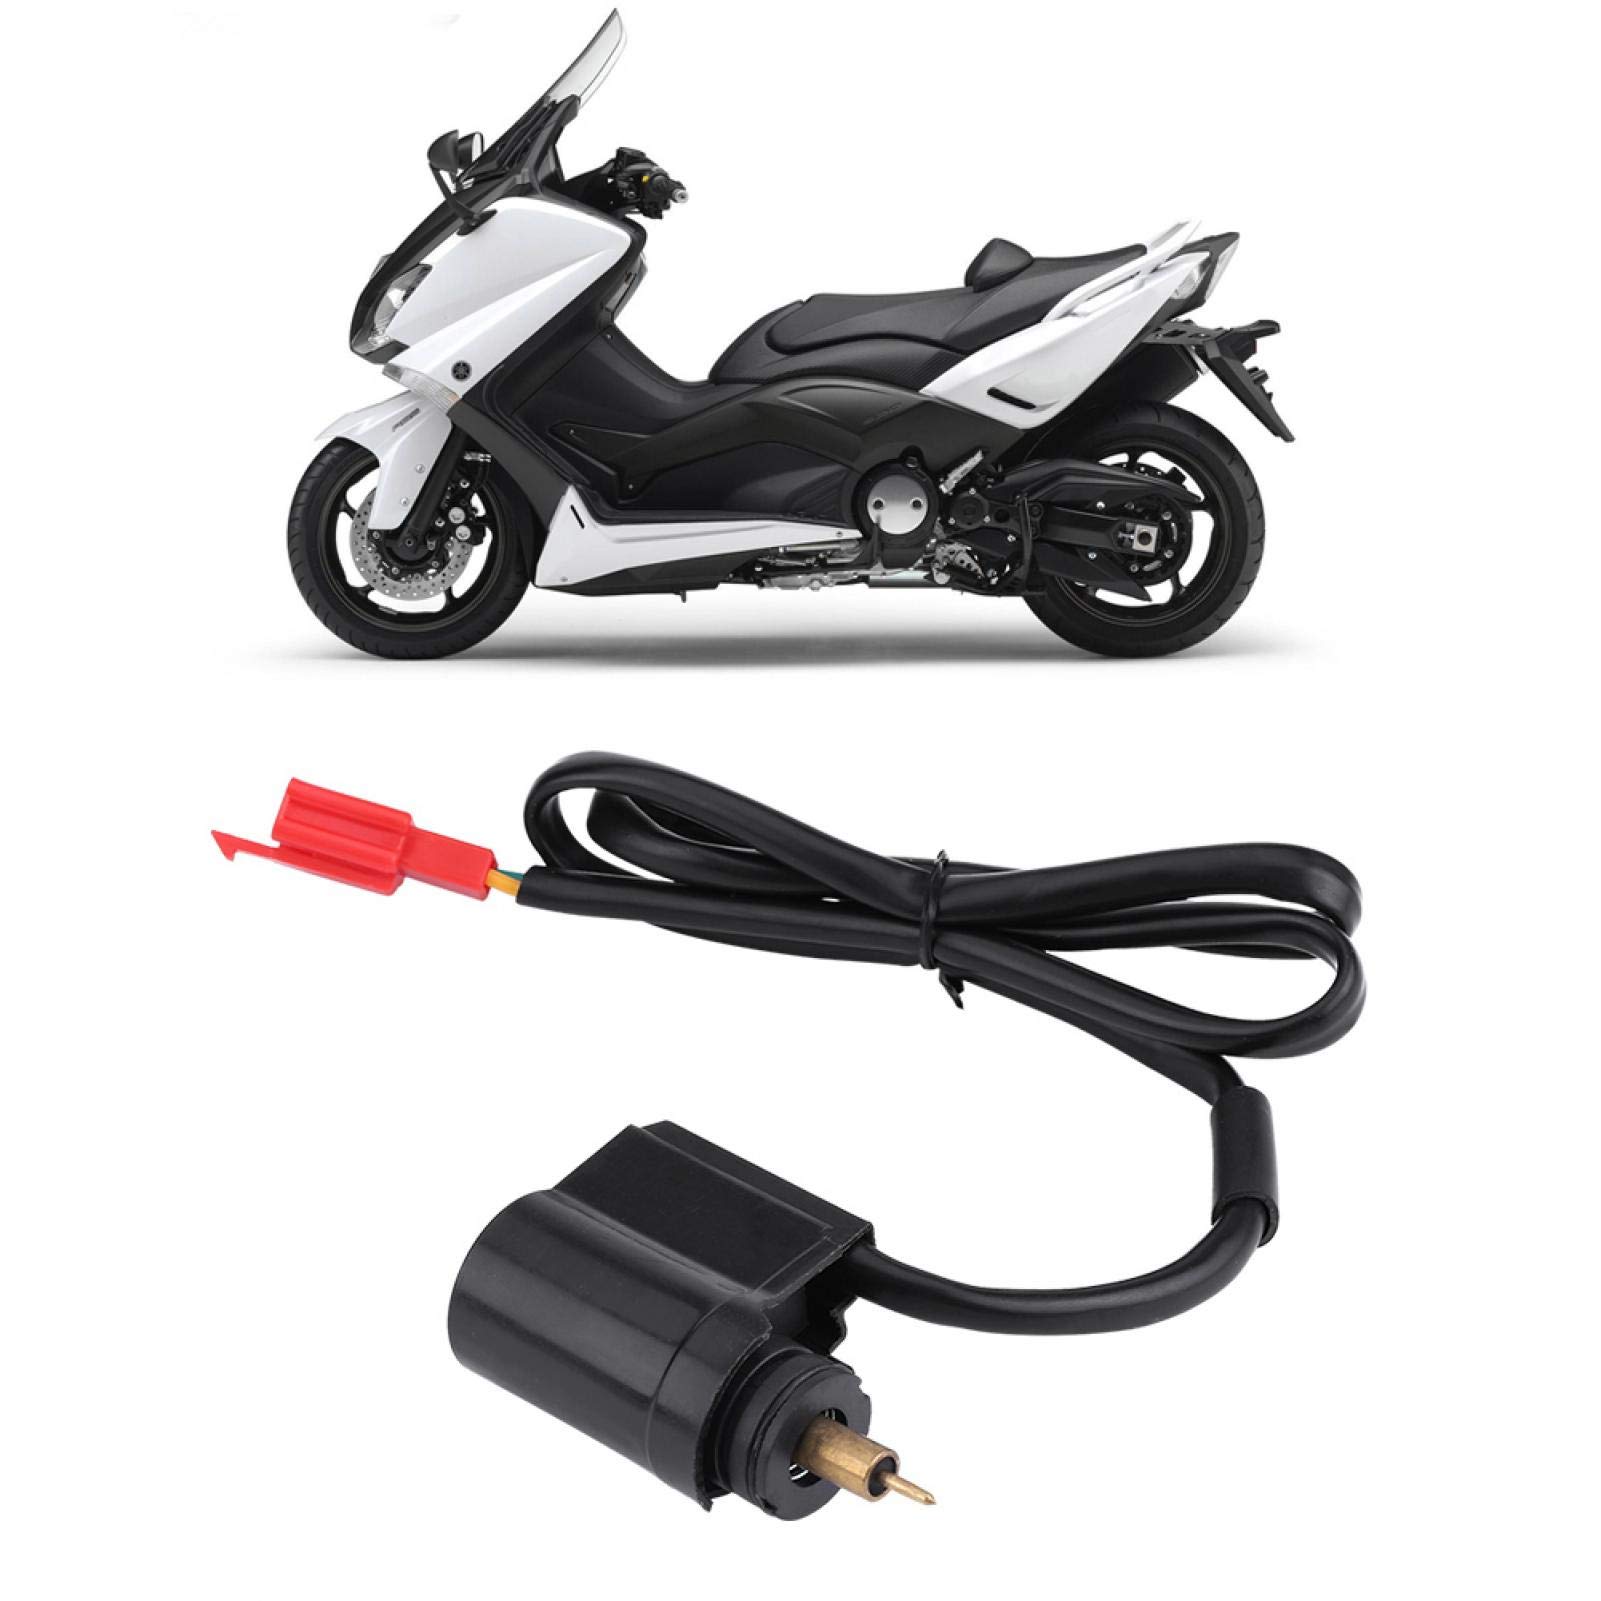 Elektrischer Choke 2 Takt, Elektrischer Choke, 2-poliger Vergaser, Automatischer Elektrischer Choke für GY6 50 Cc 125 Cc 150 Cc Scooter Moped von Majatou